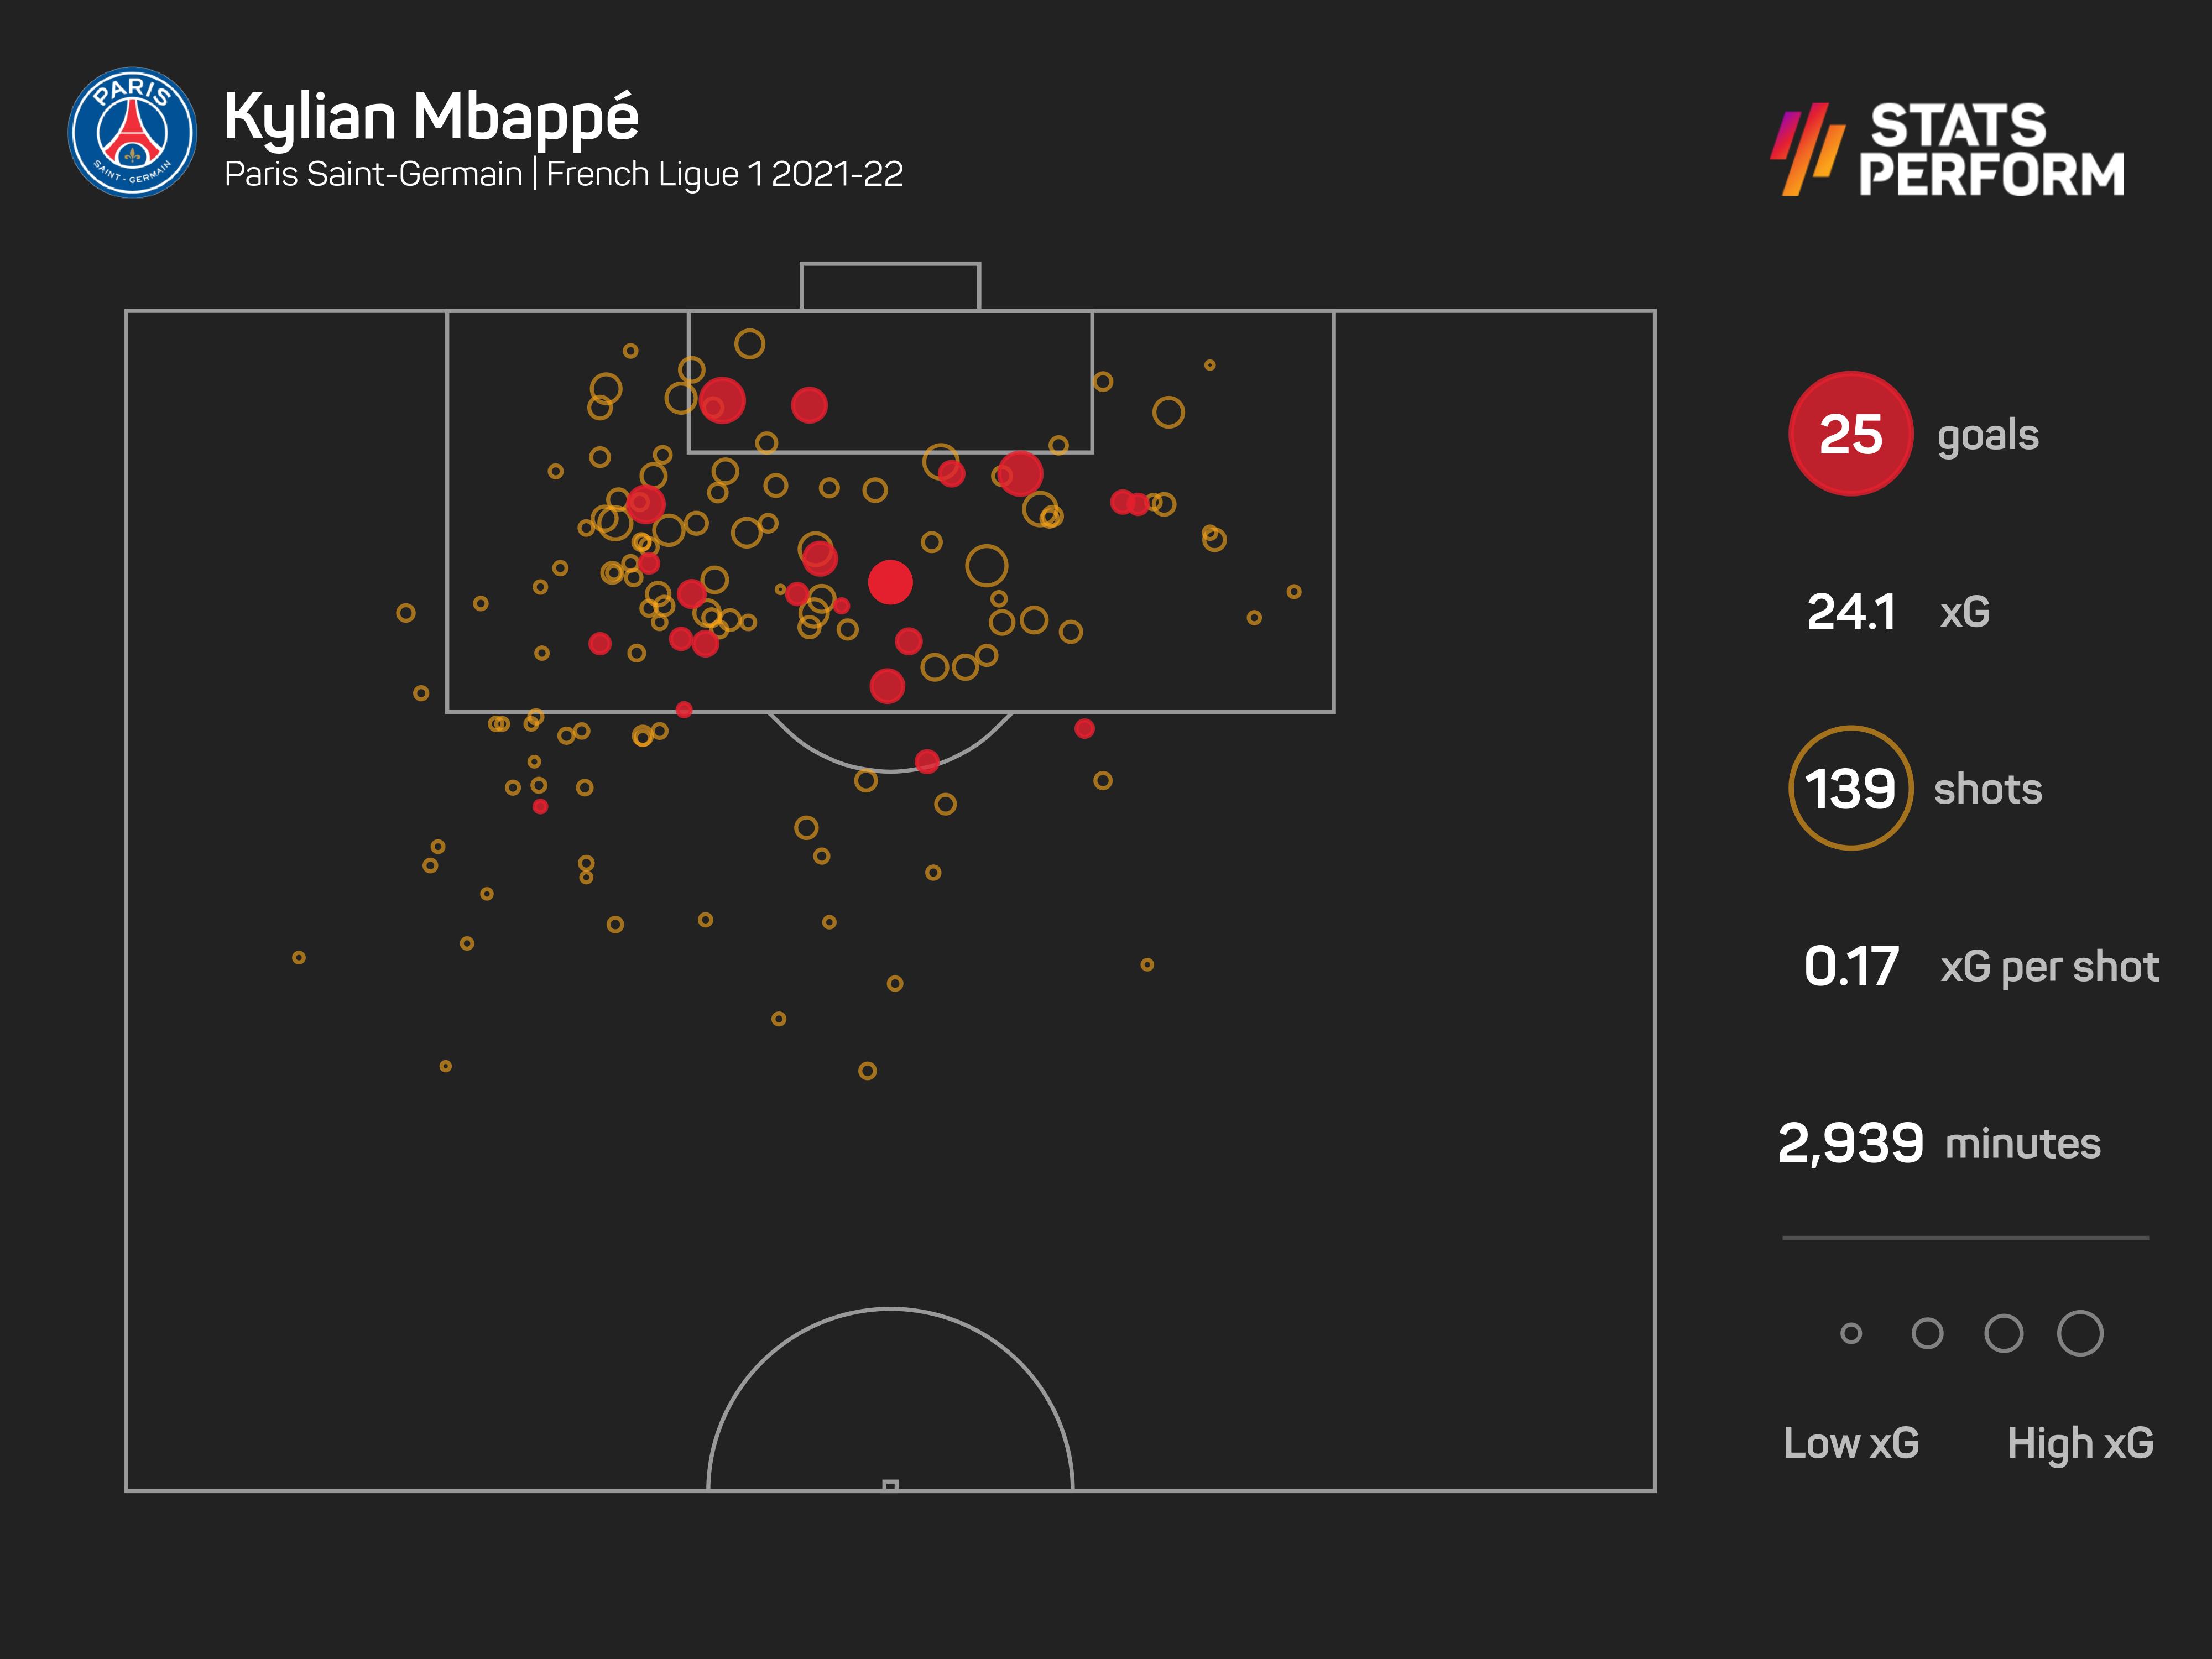 Kylian Mbappe has enjoyed another sensational season